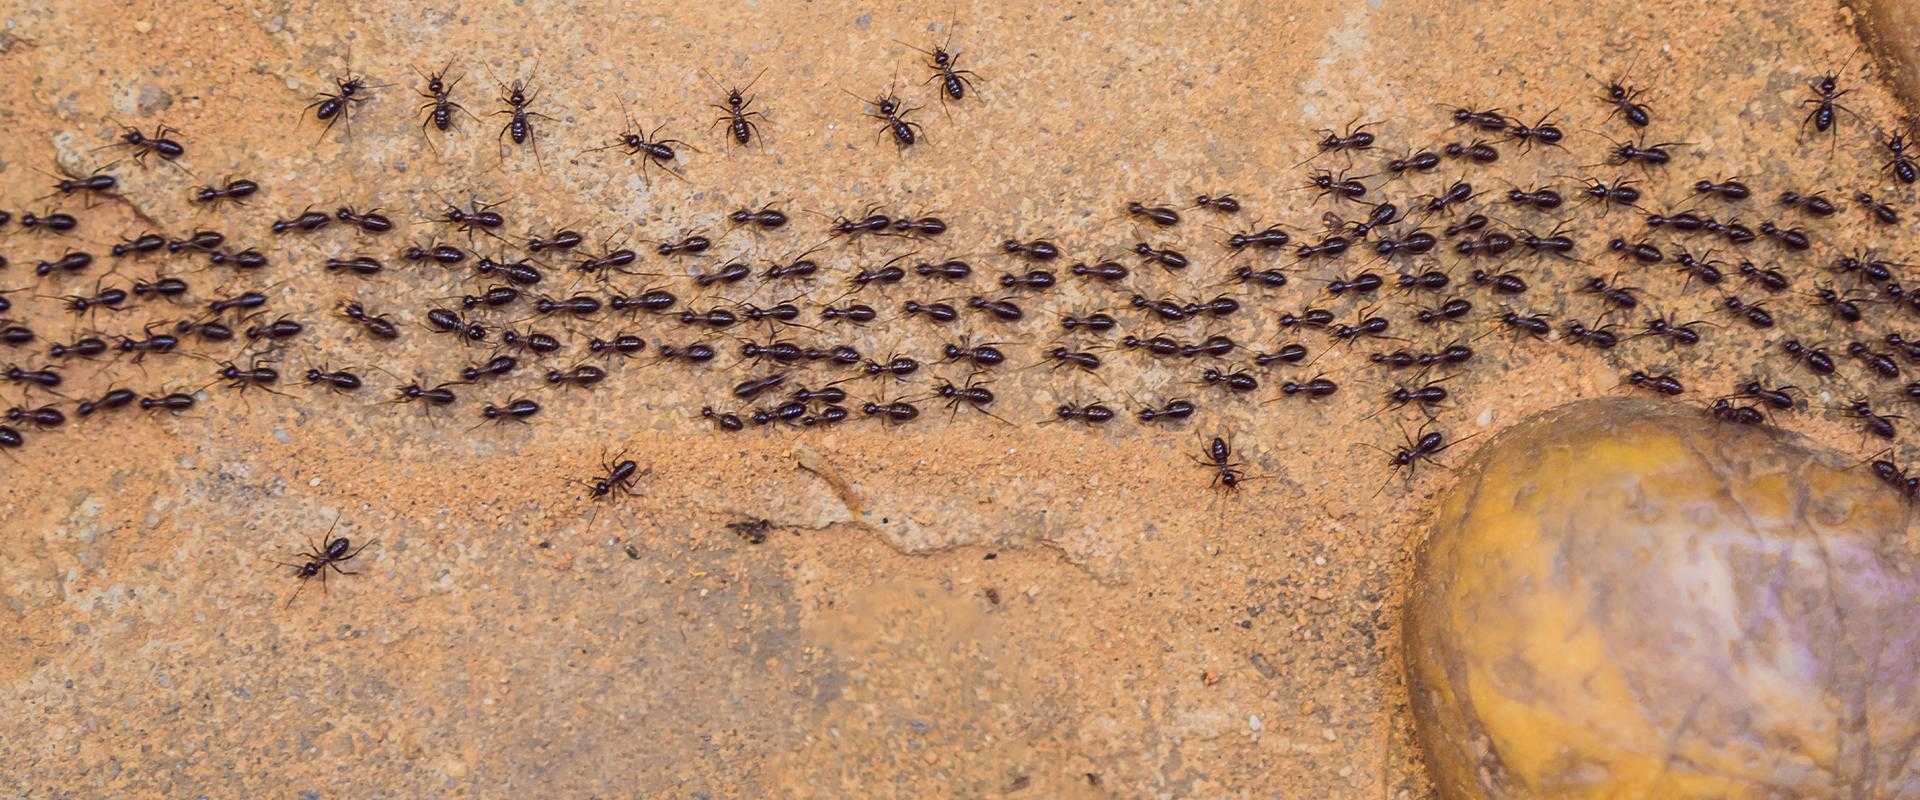 ants in san jose california